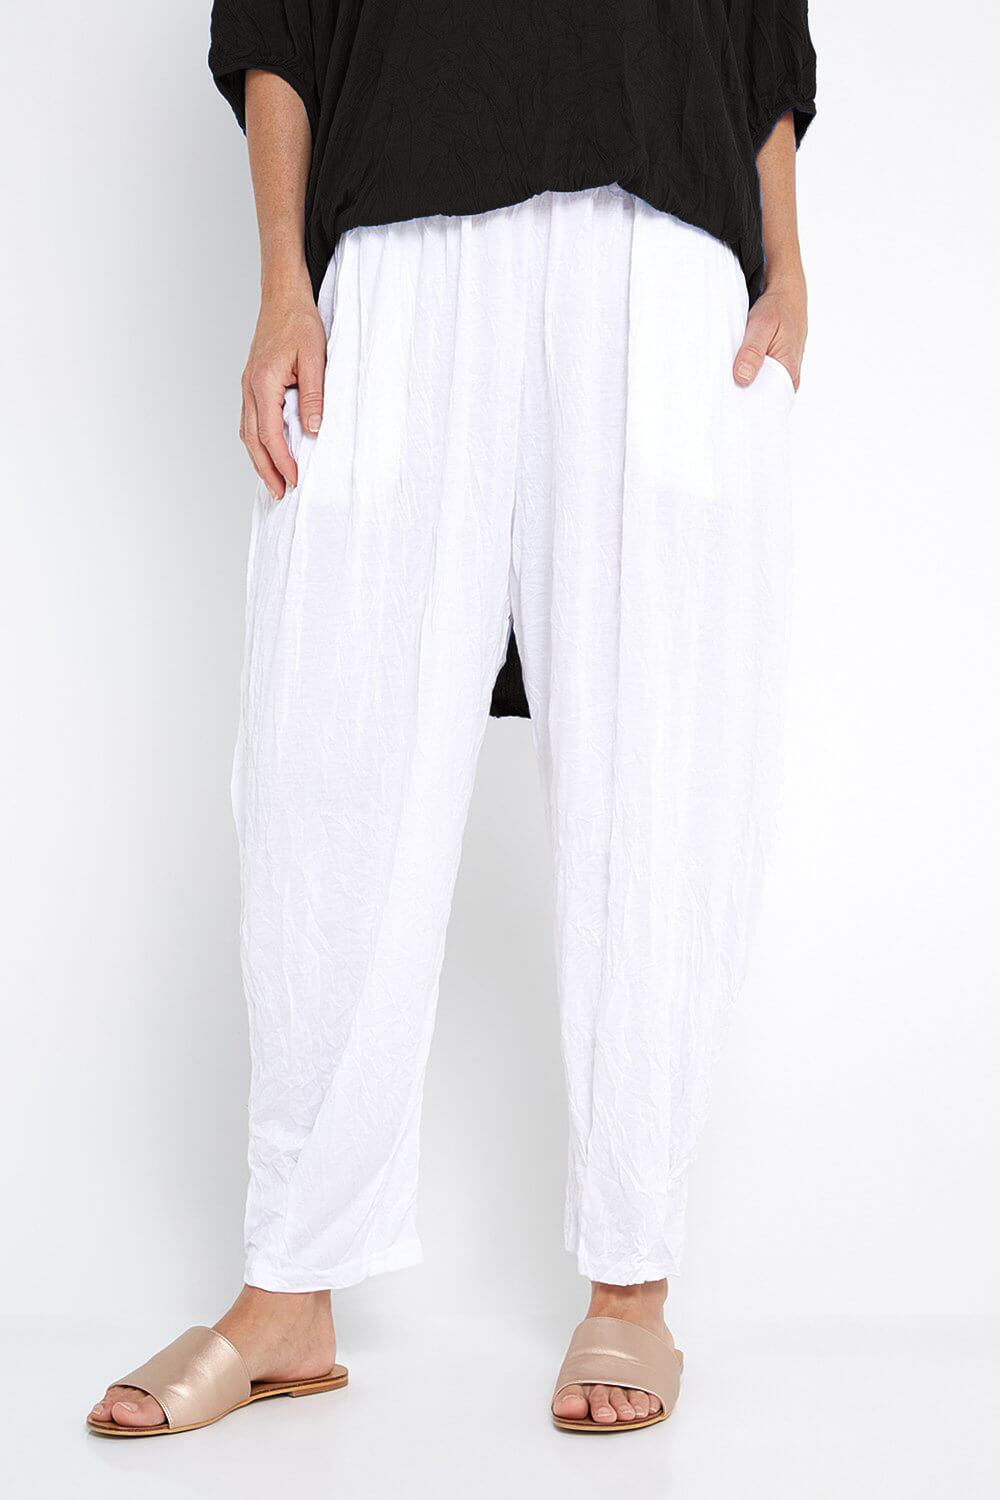 TULIO Fashion | Alisha Pants - White | Shop New Arrivals